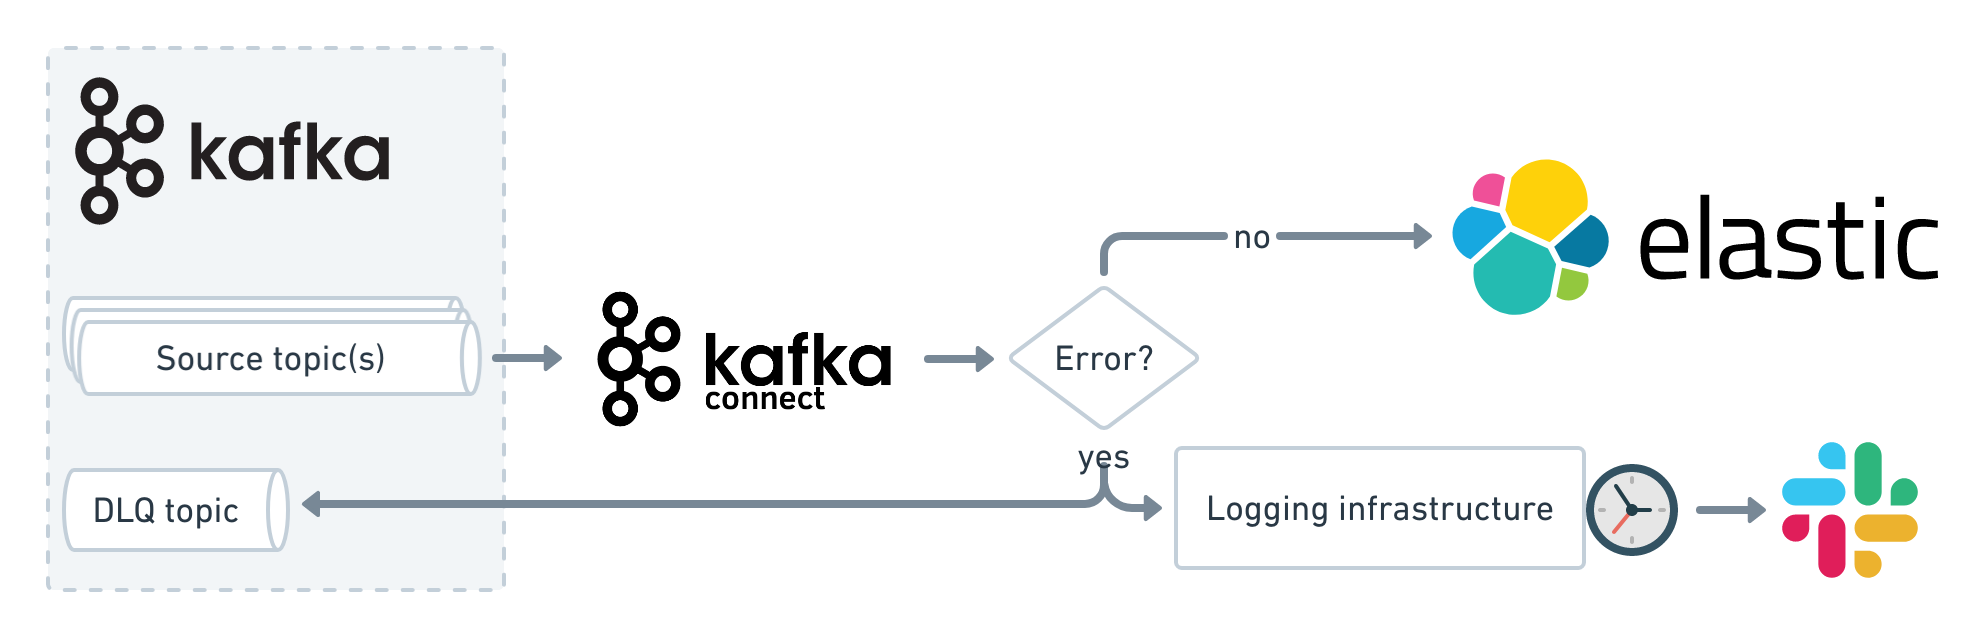 error handling with kafka connect